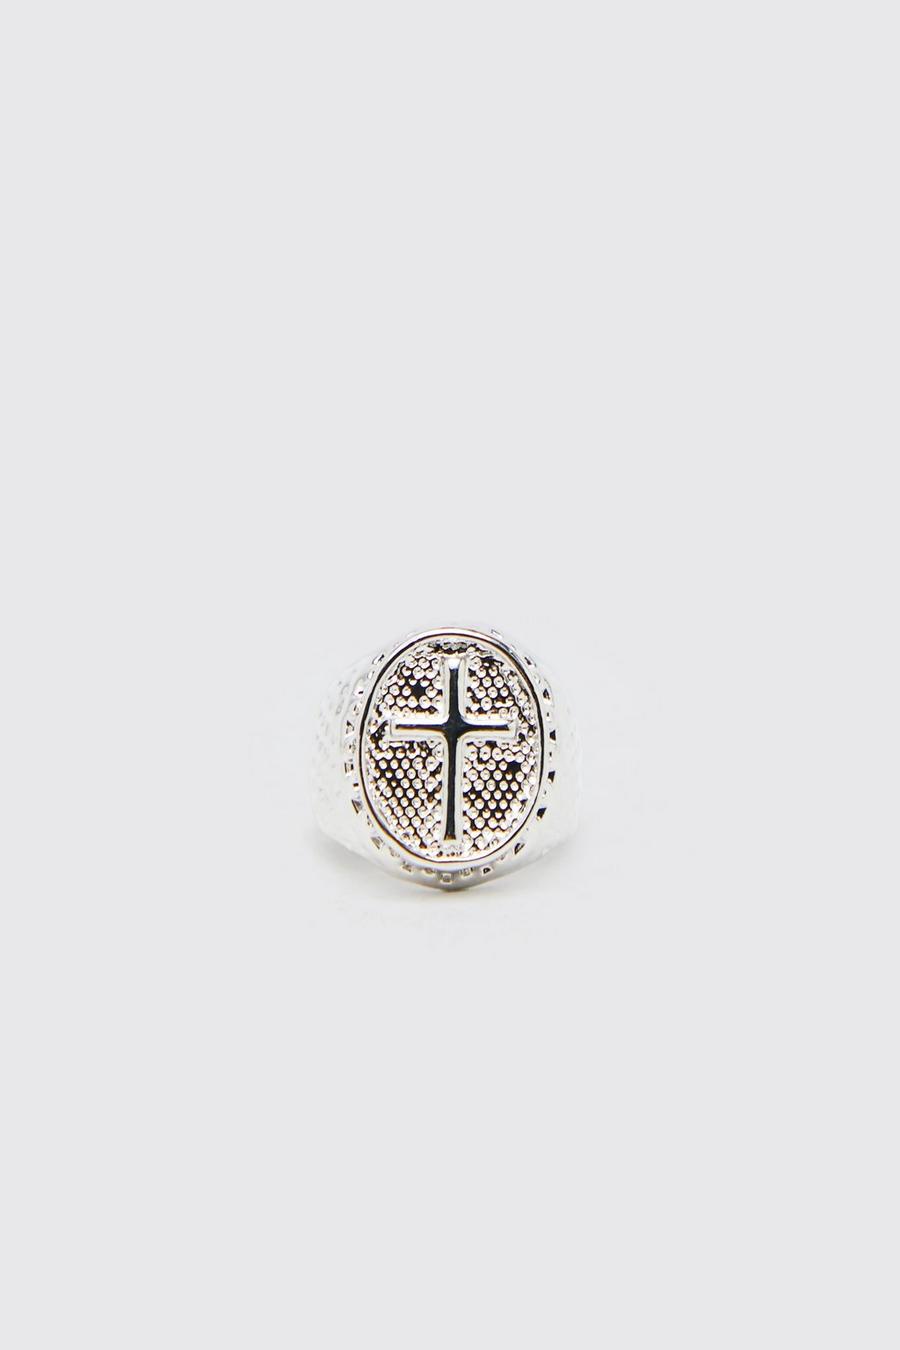 Silver argent Cross Emblem Signet Ring